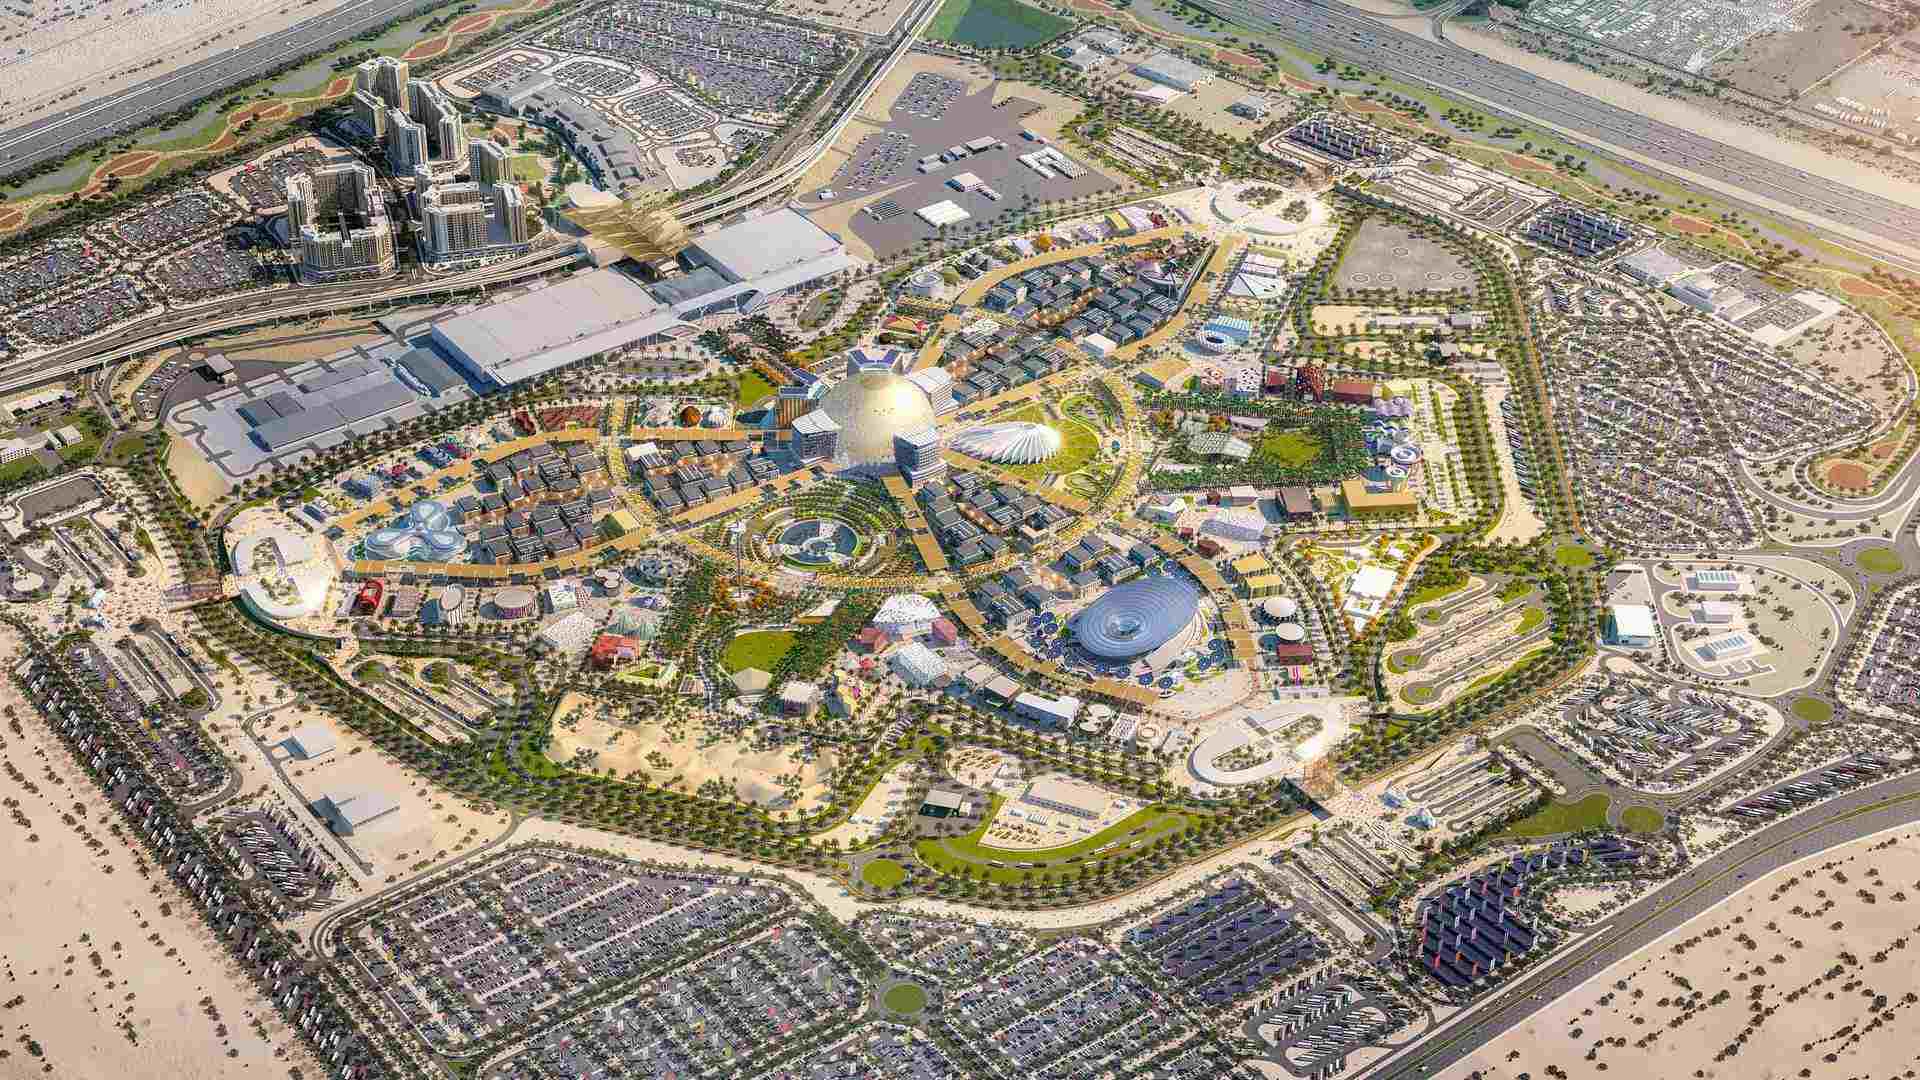 Pavillions of Expo 2020 Dubai